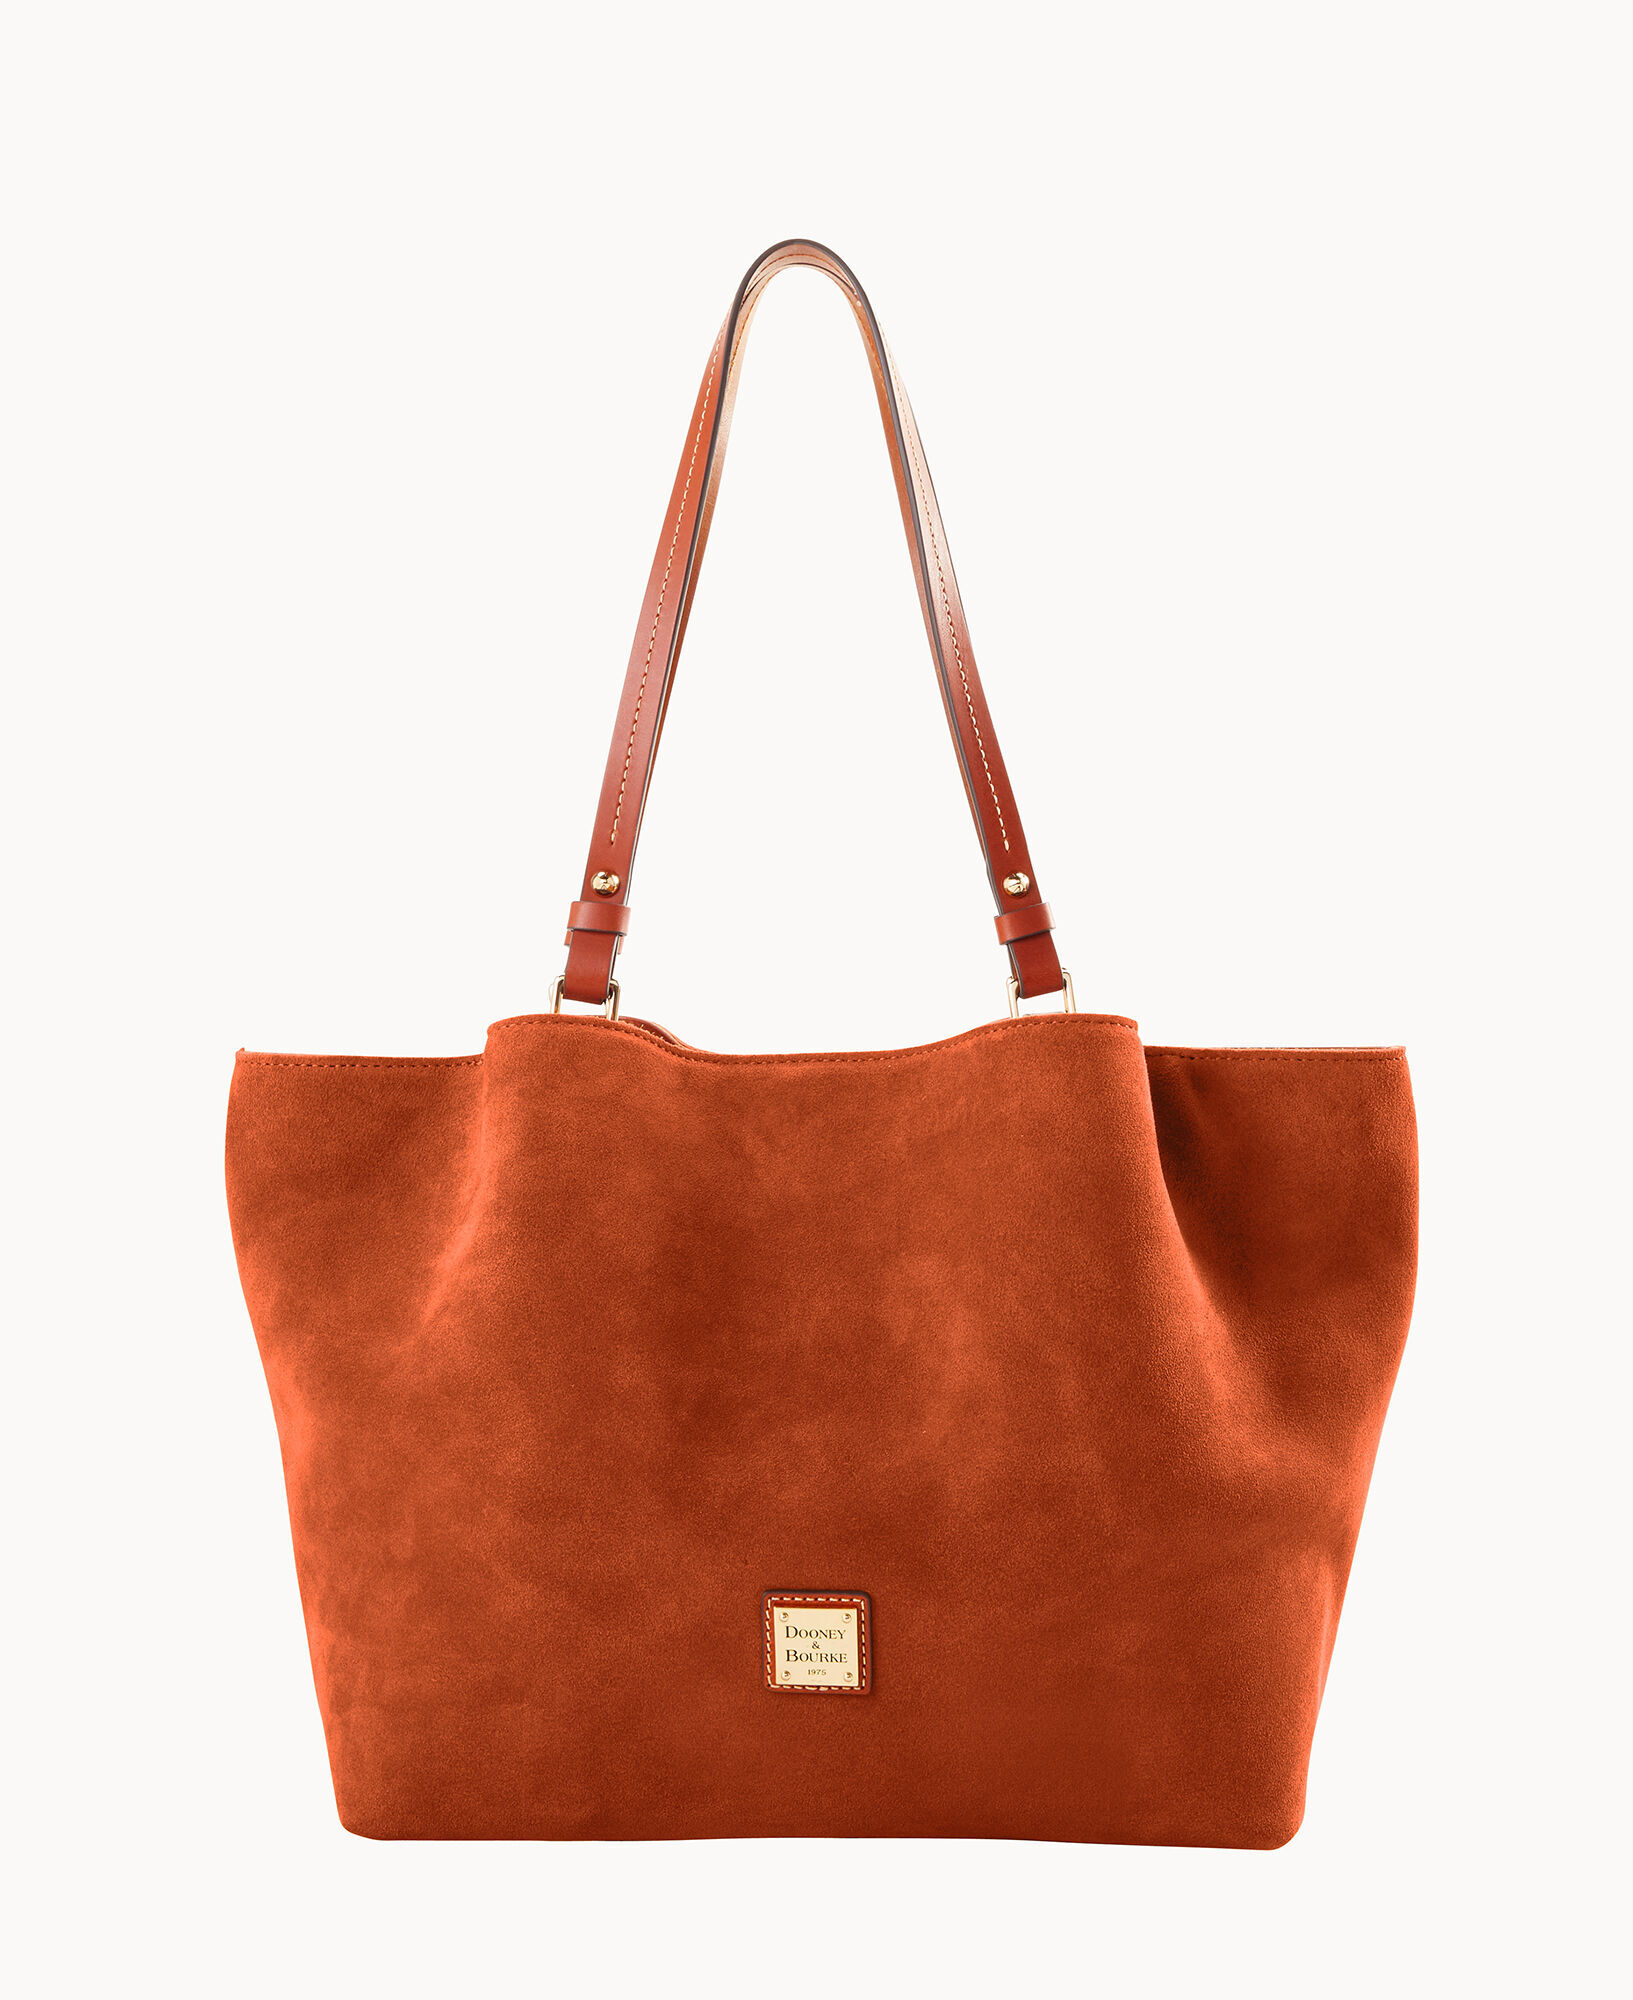 Mini Ostrich Leather Morgan Bag, Red, Top Handle Bag